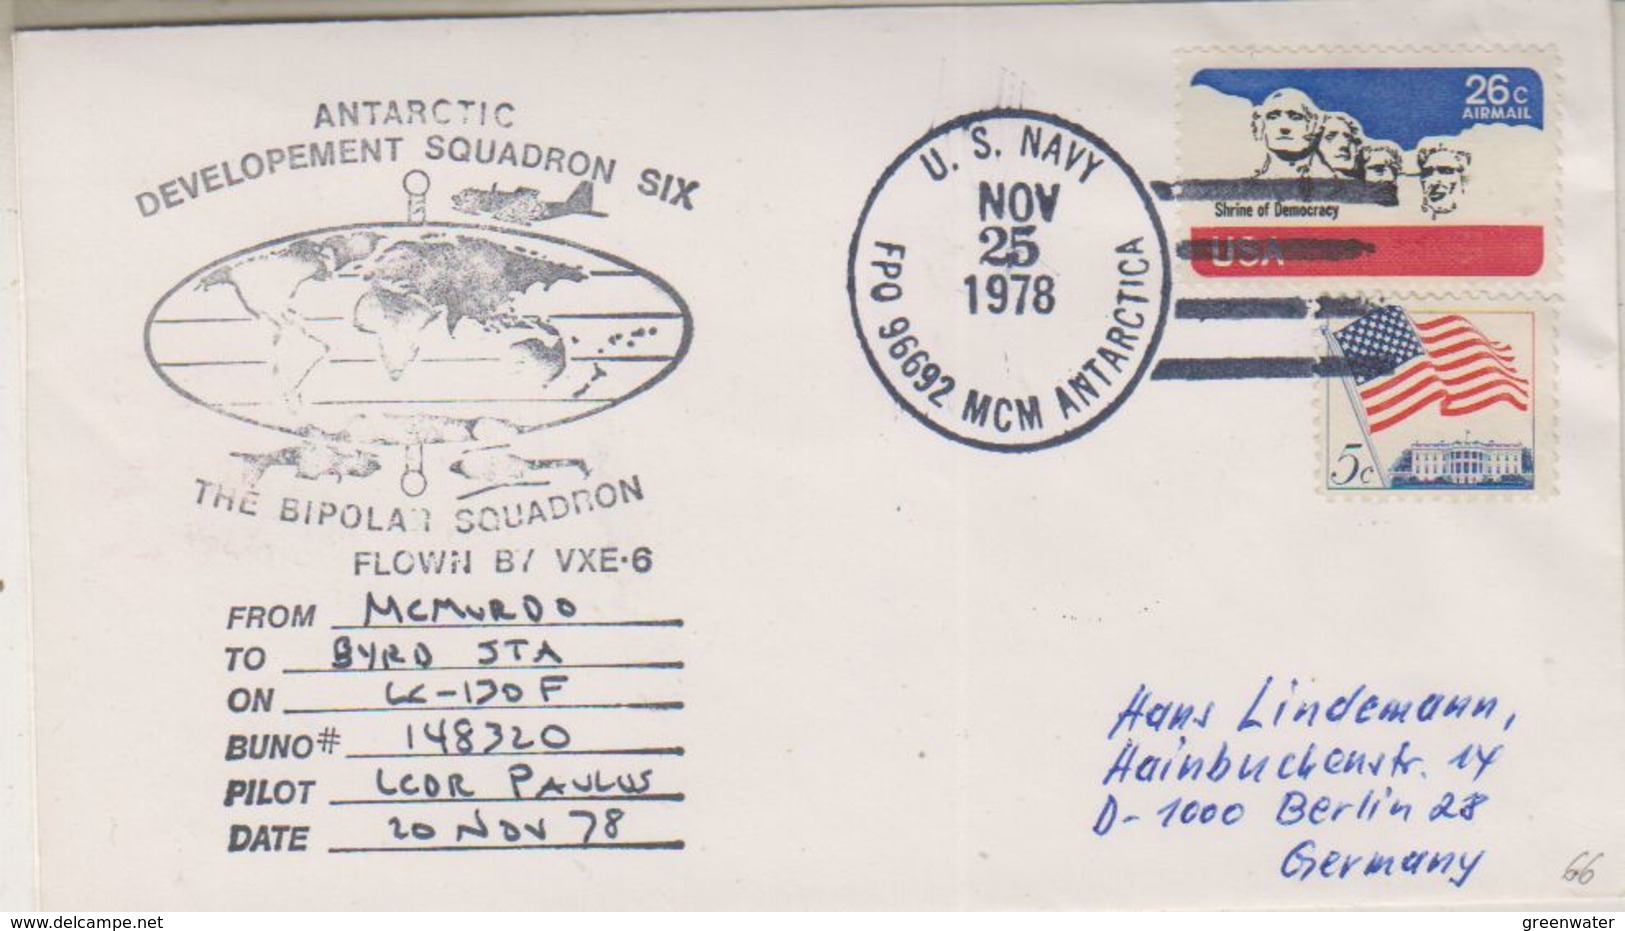 USA 1978 Flown Cover From McMurdo To Byrd Station Ca Nov 25 1978 (38581) - Polar Flights